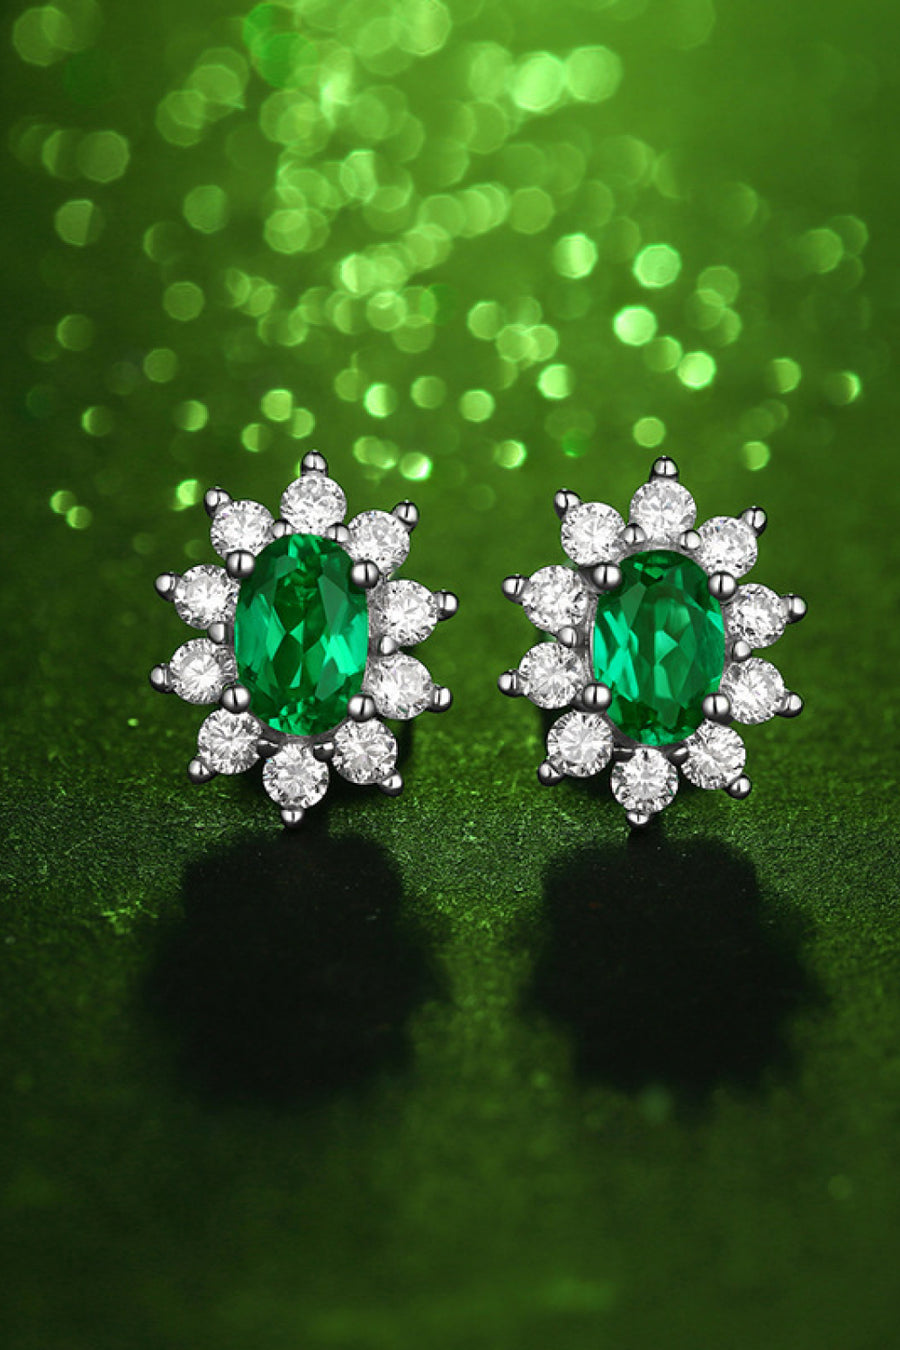 My True Love 1 Carat Lab-Grown Emerald Stud Earrings